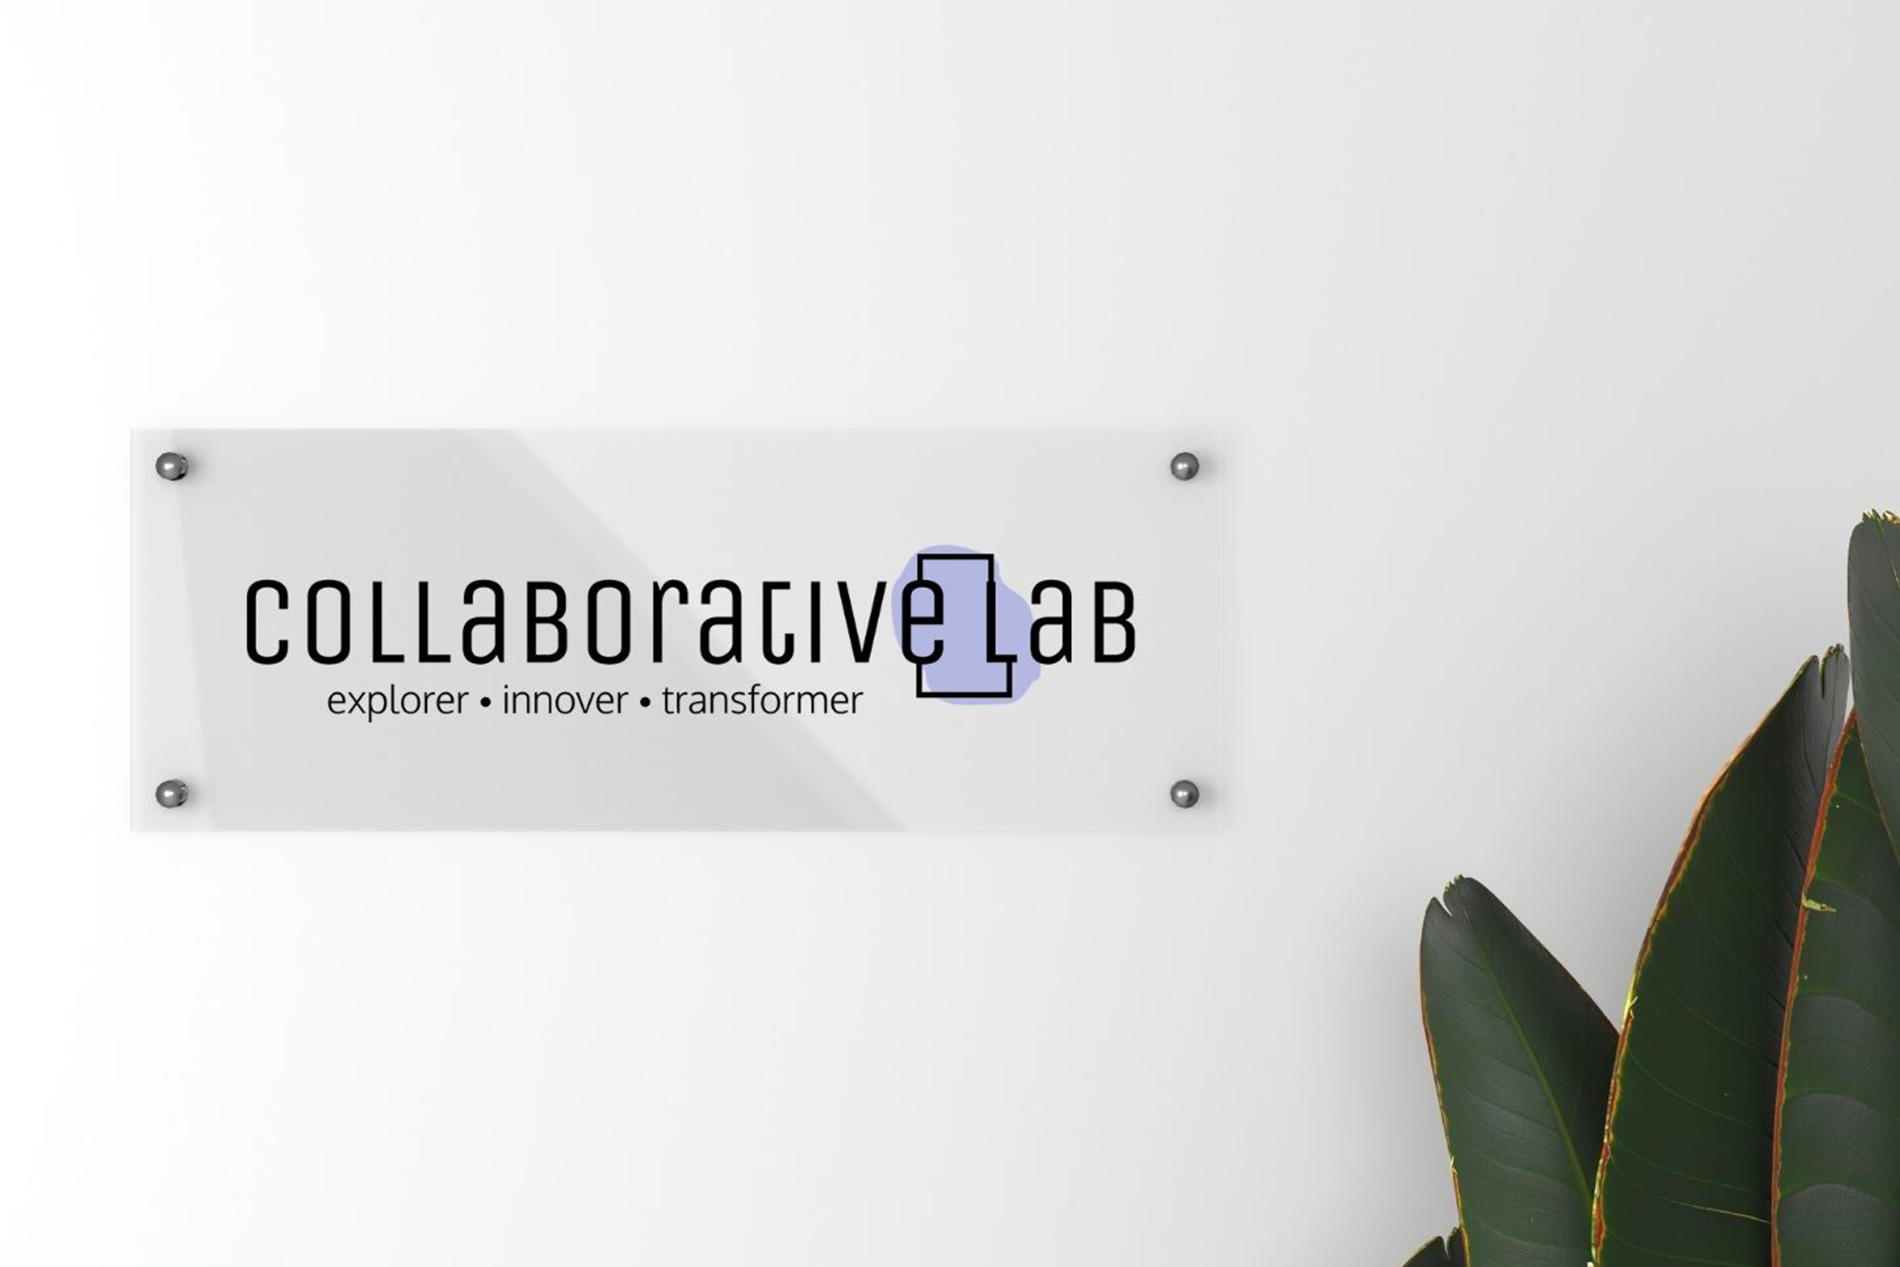 Collaborativelab innovation